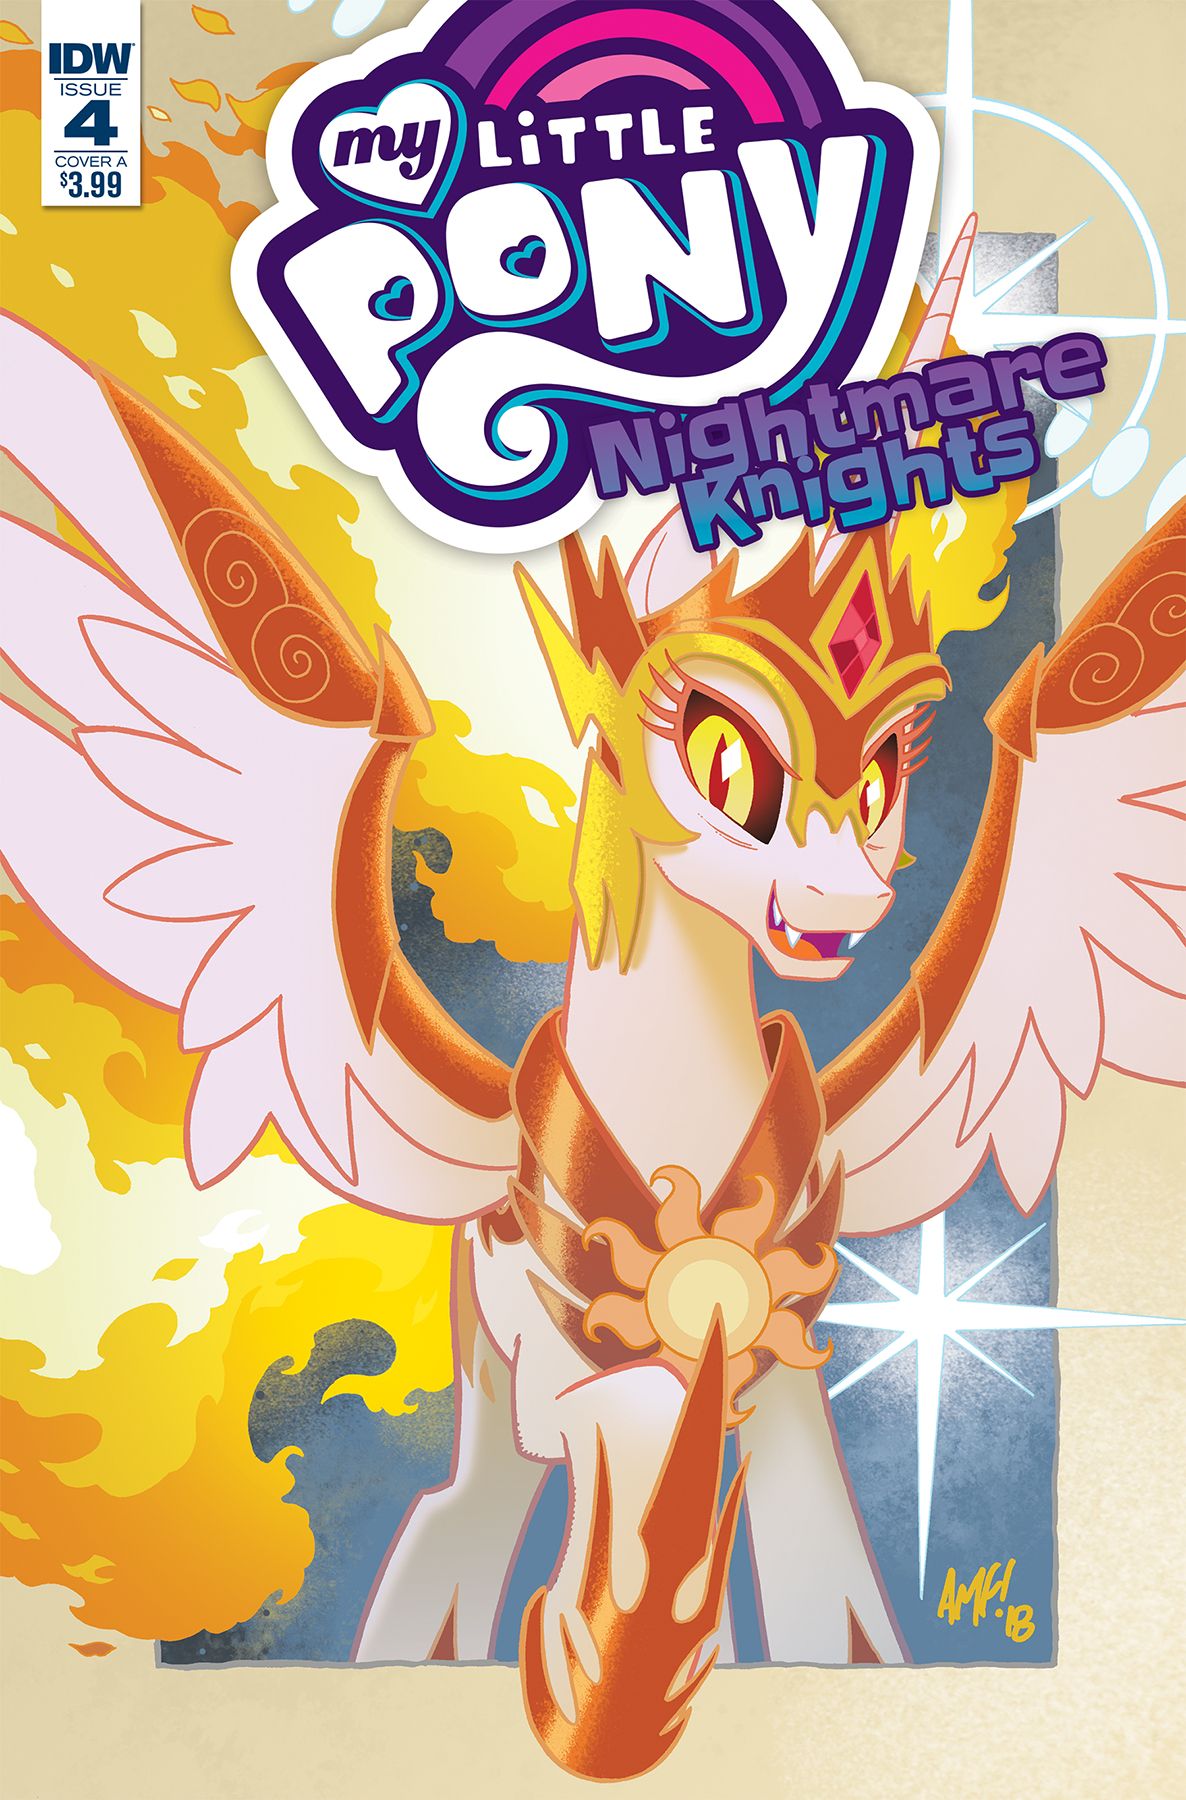 My Little Pony: Nightmare Knights #4 Comic